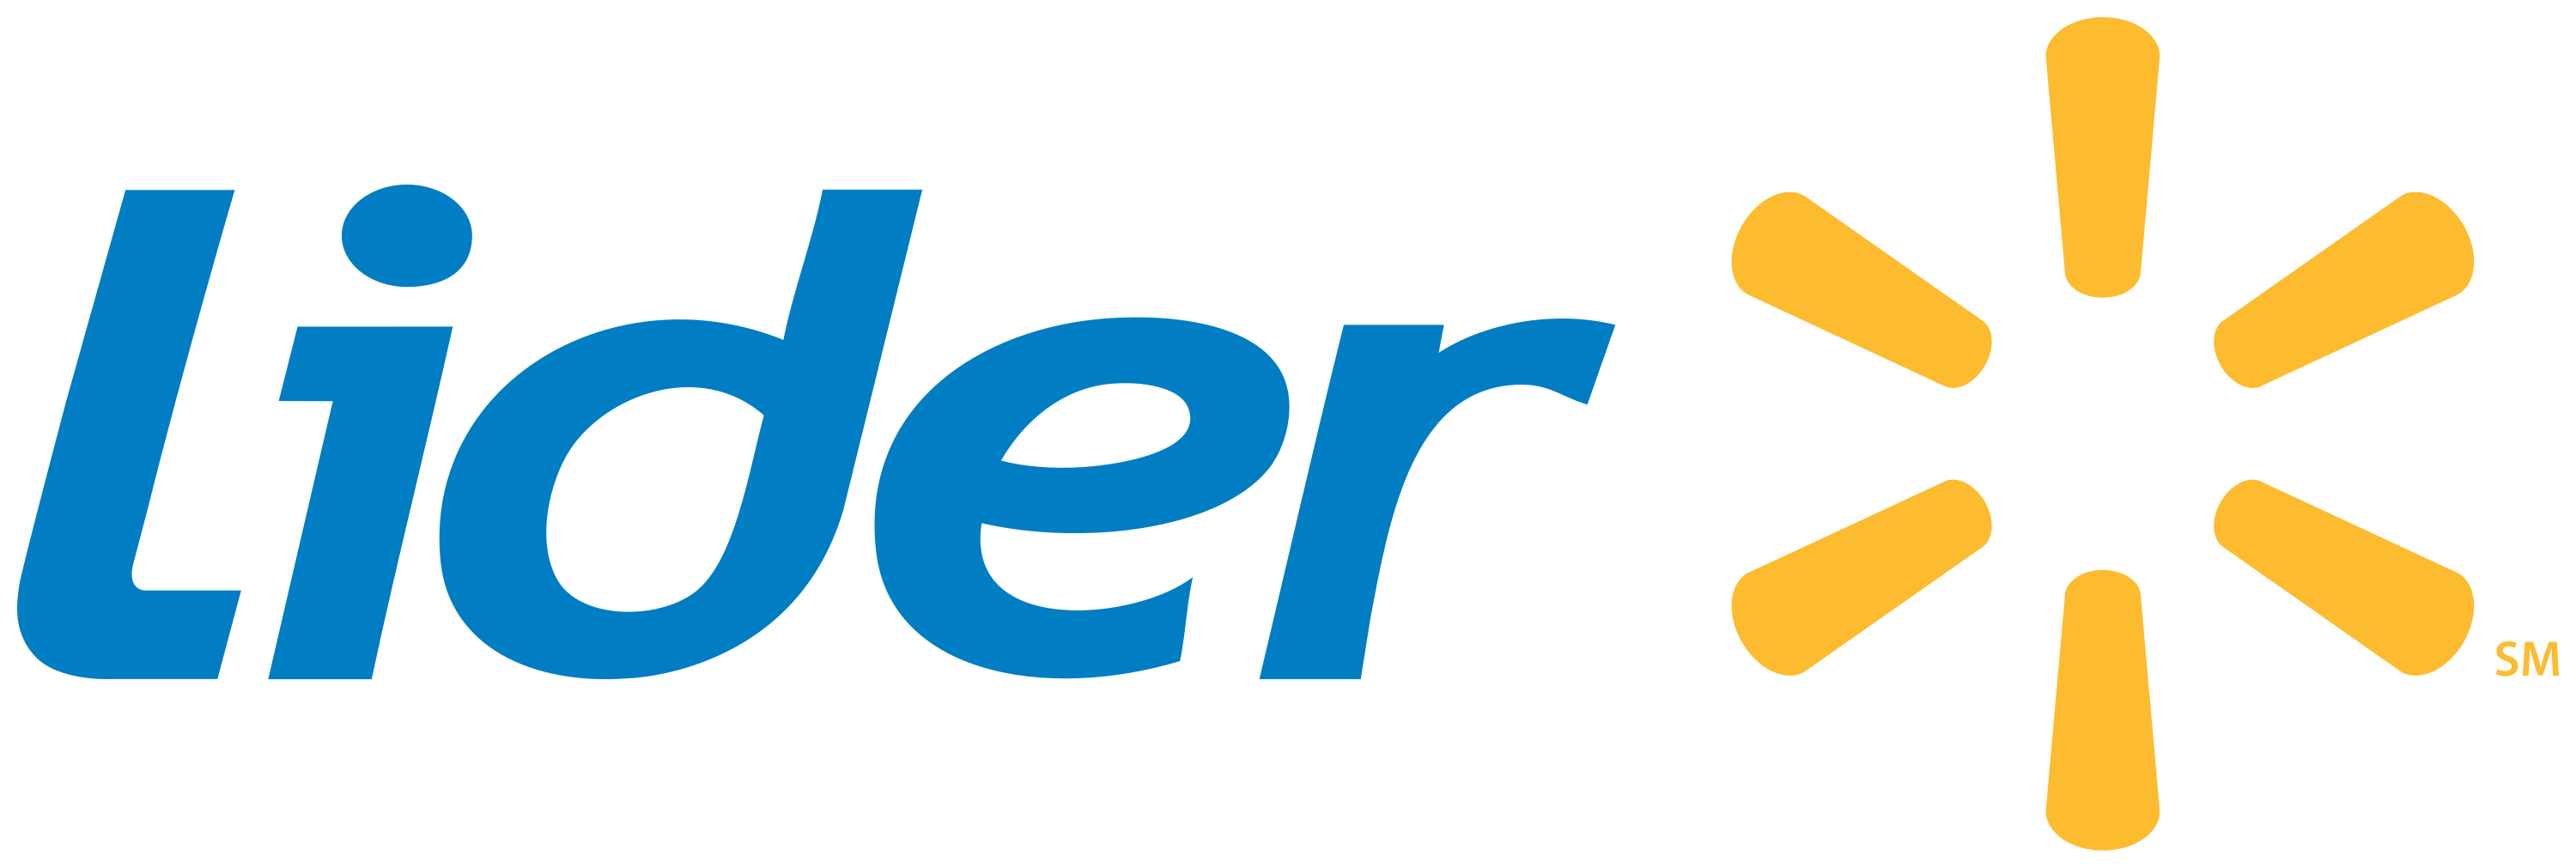 Logo Lider